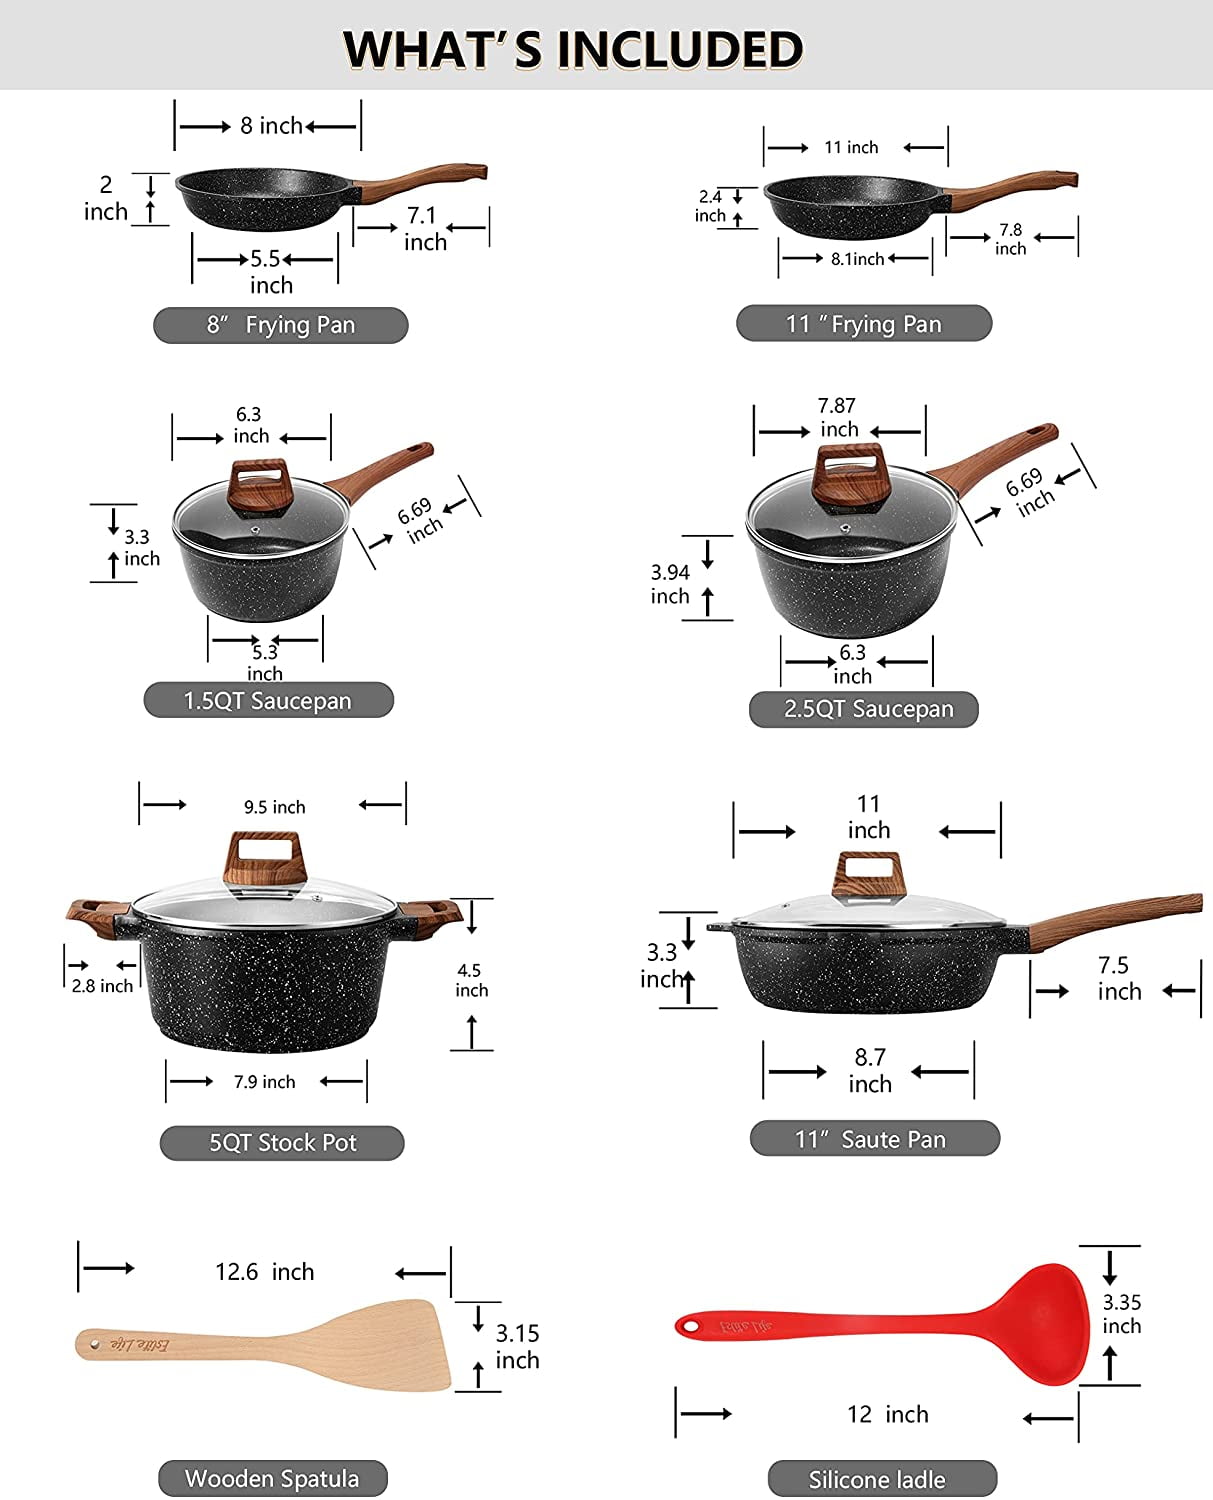 Eslite Life Nonstick Woks & Stir-Fry Pans, Deep Frying Pan with Lid Induction Compatible (5 Quart // 12 inch)